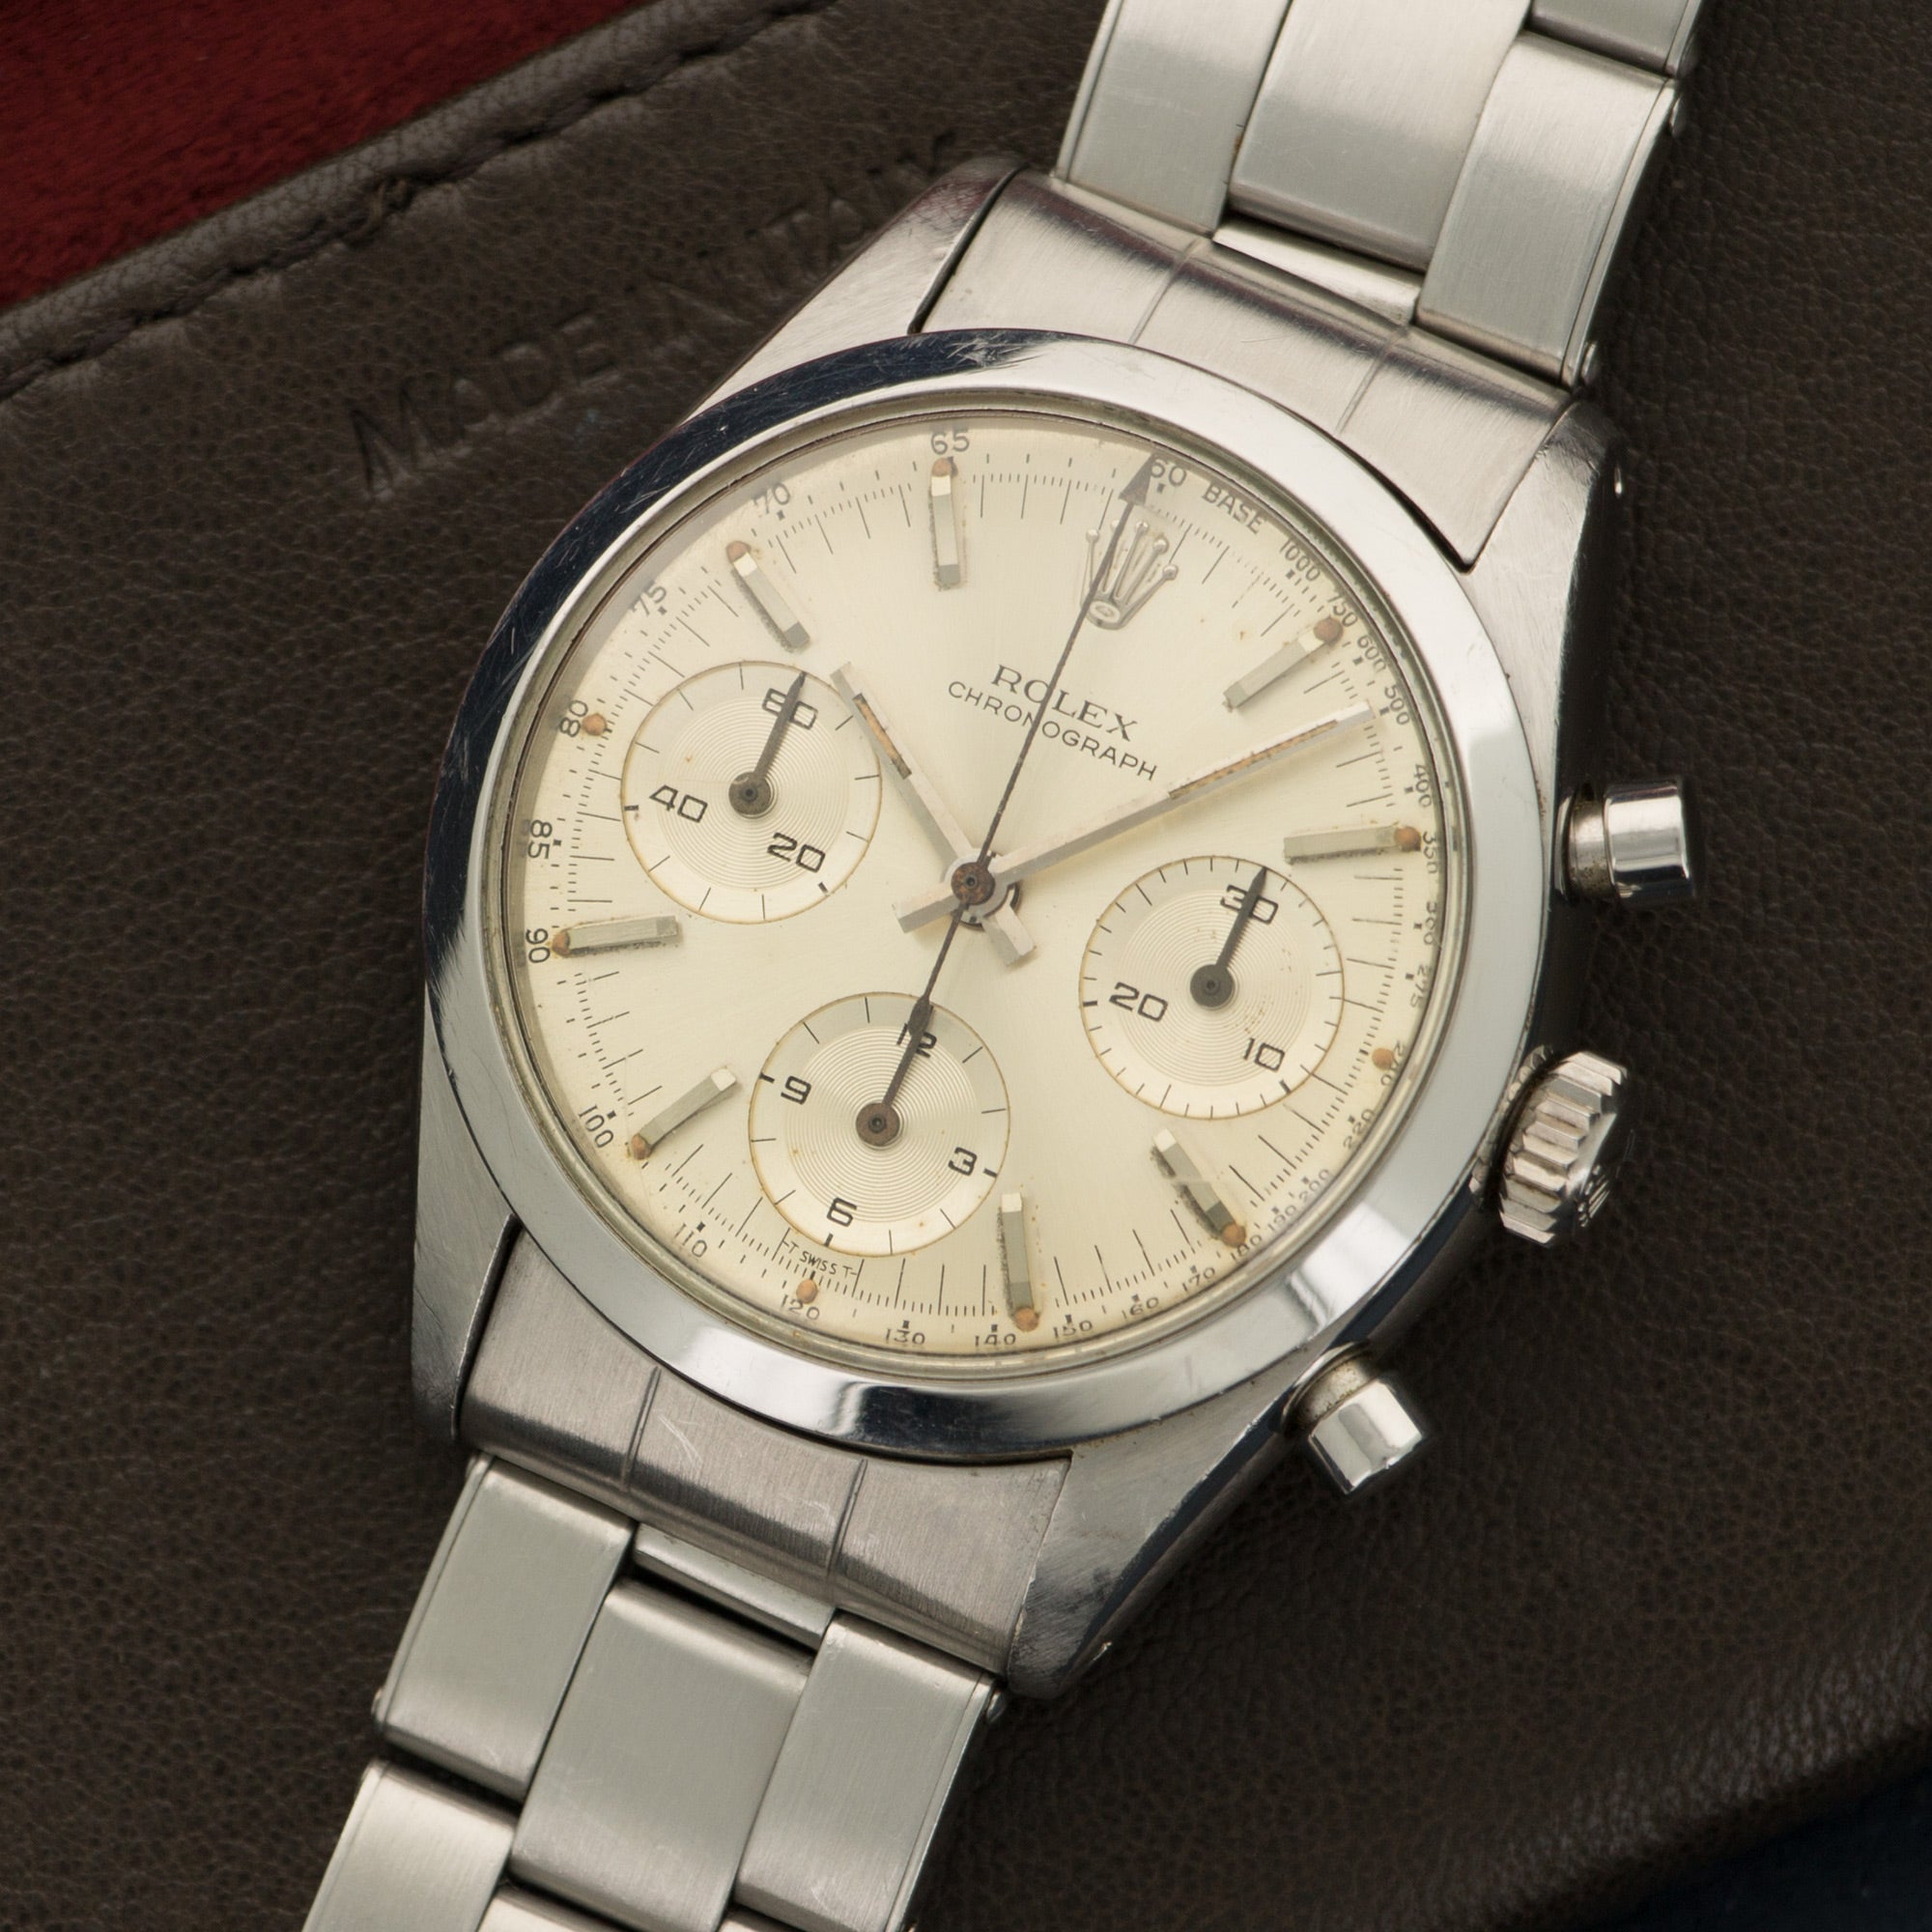 Rolex - Rolex Steel Cosmograph Pre-Daytona Watch Ref. 6238, Circa 1965 - The Keystone Watches